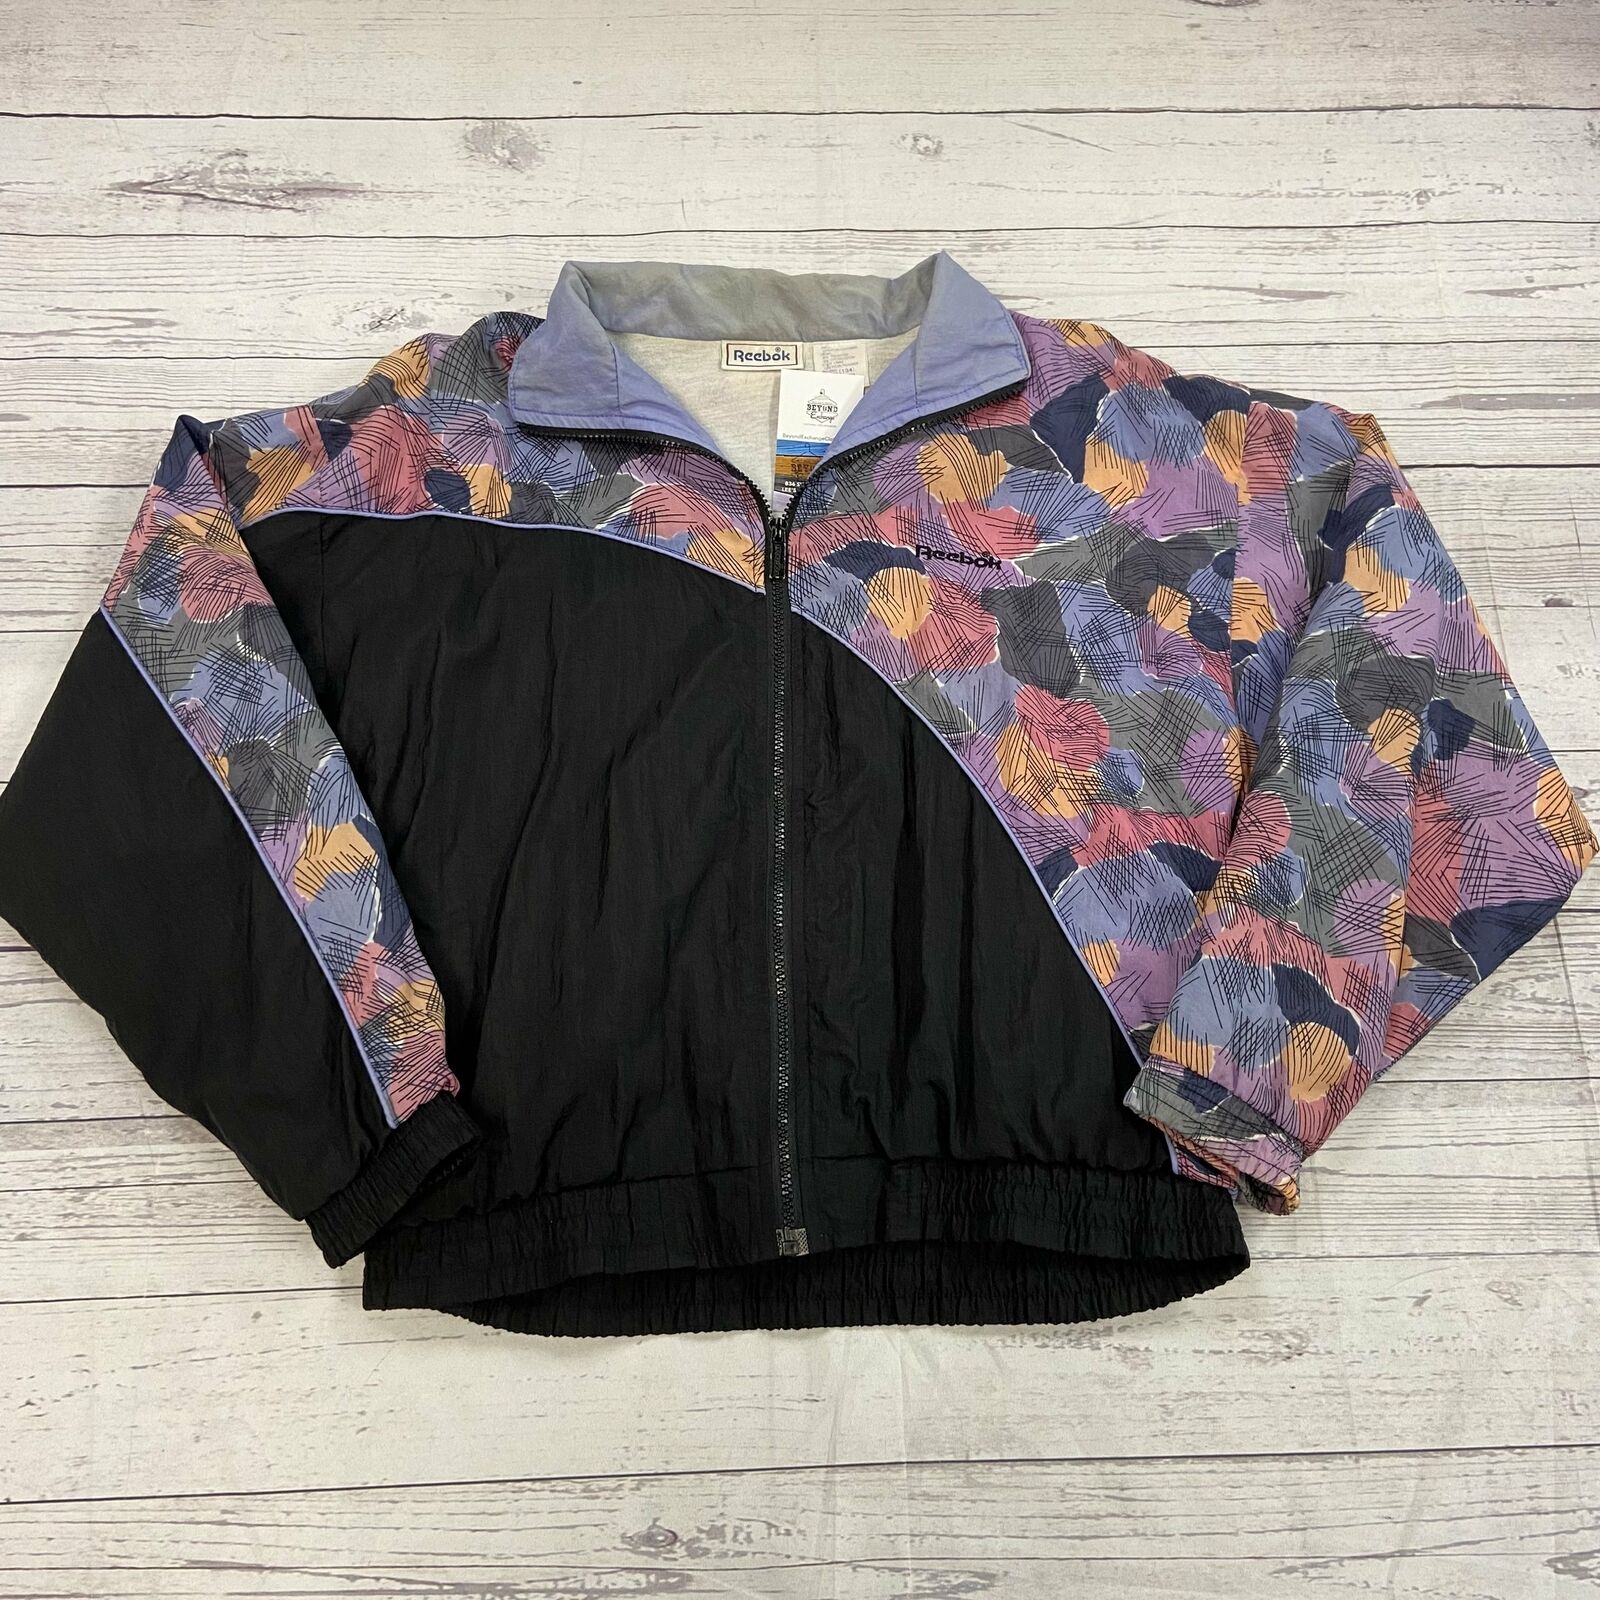 Vintage Reebok Black Purple Zip Up Track Jacket Women’s Size Medium